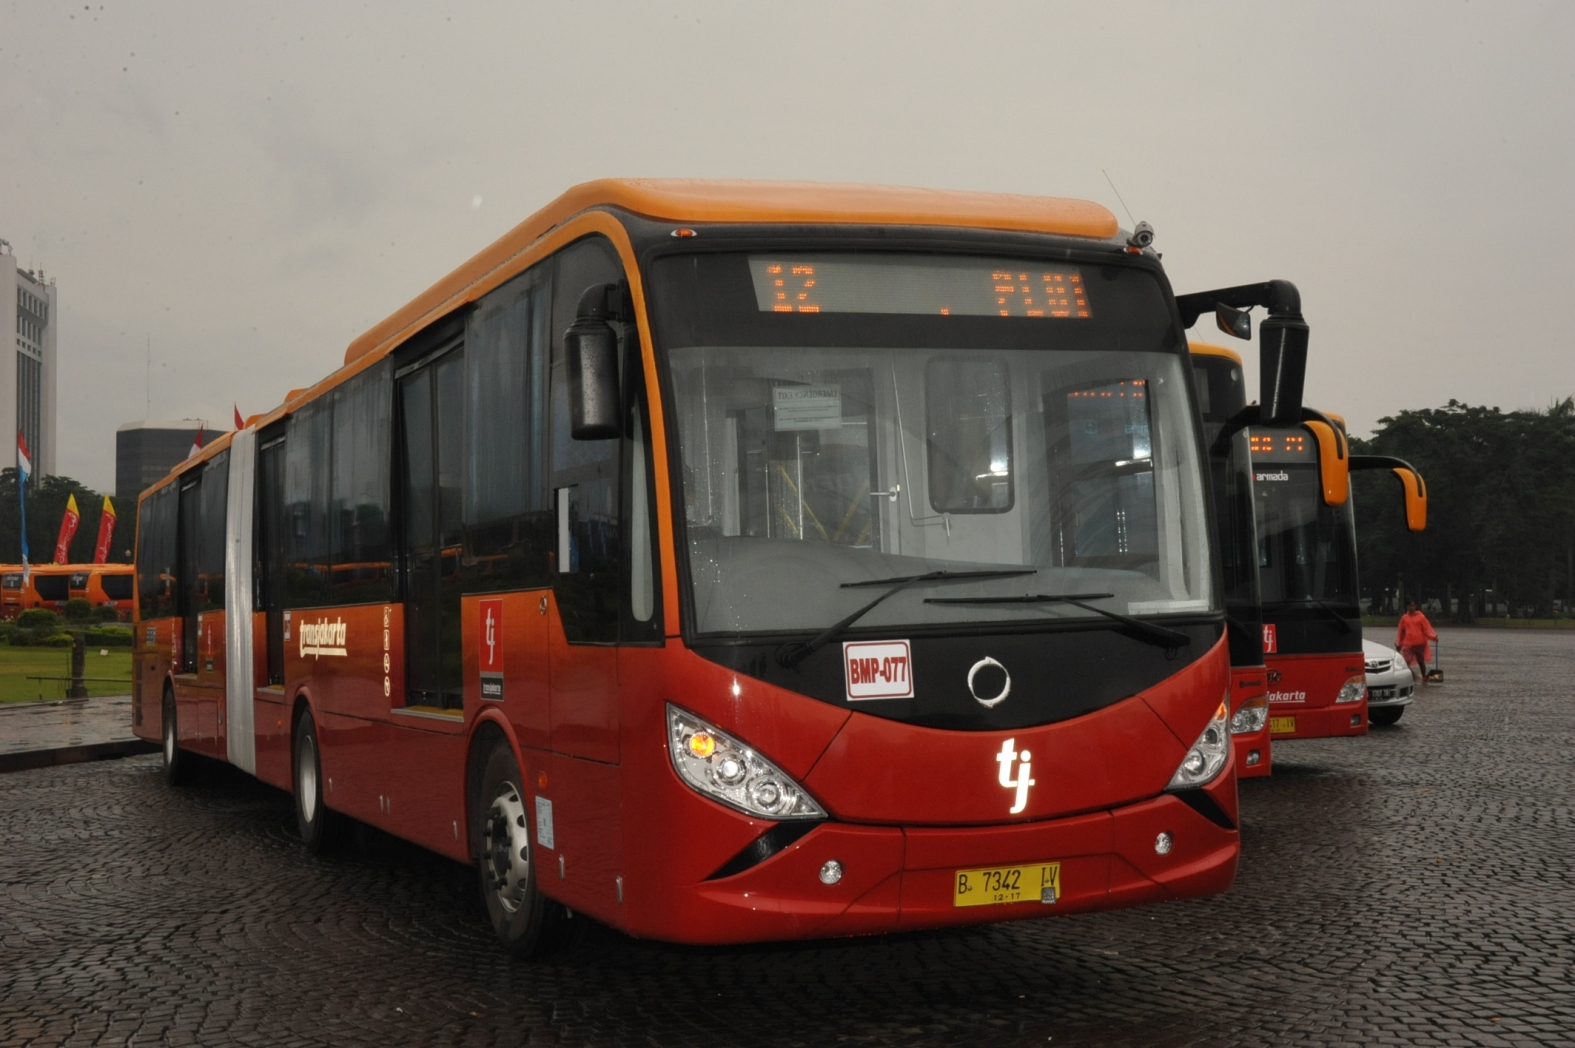 Jenis-Jenis Bus yang Digunakan TRANSJAKARTA/BUSWAY